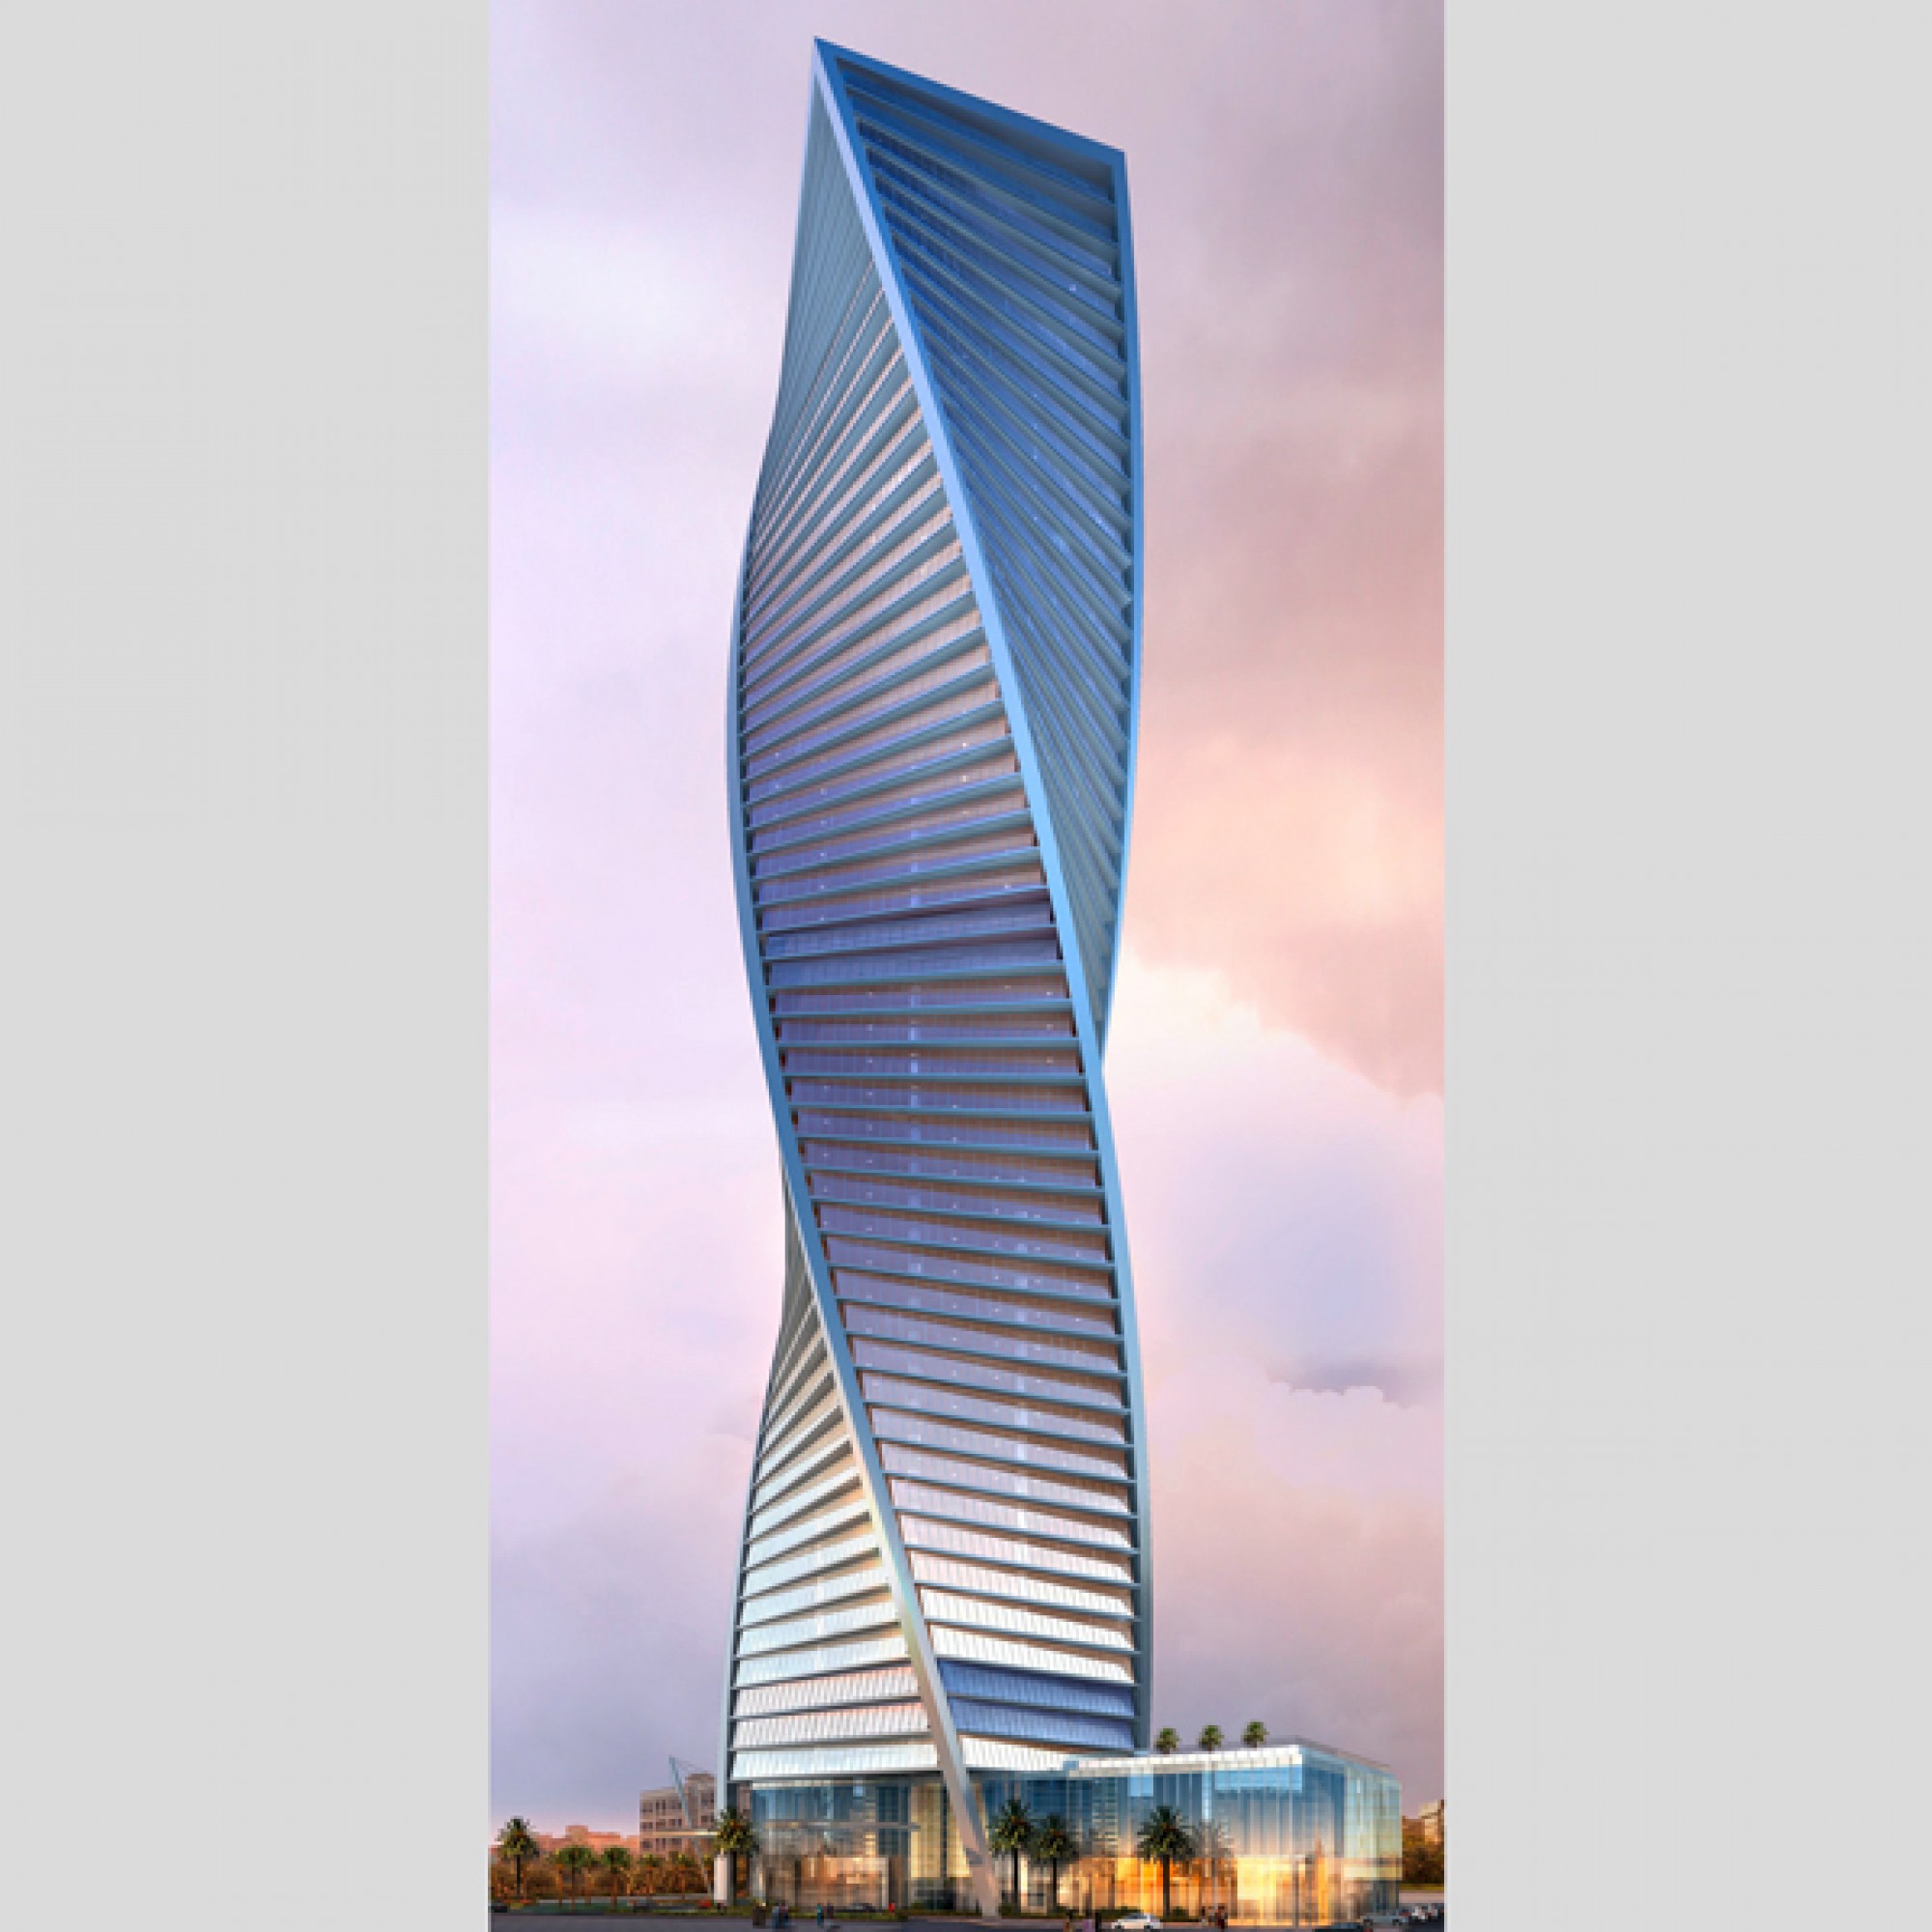  Rang 9, Al Majdoul Tower, Riad, Saudi Arabien, Fertigstellung voraussichtlich 2016,  232 Meter hoch, 54 Stockwerke, Rotation total 135 Grad, Rotation pro Etage 2.5  Grad. (zvg) 